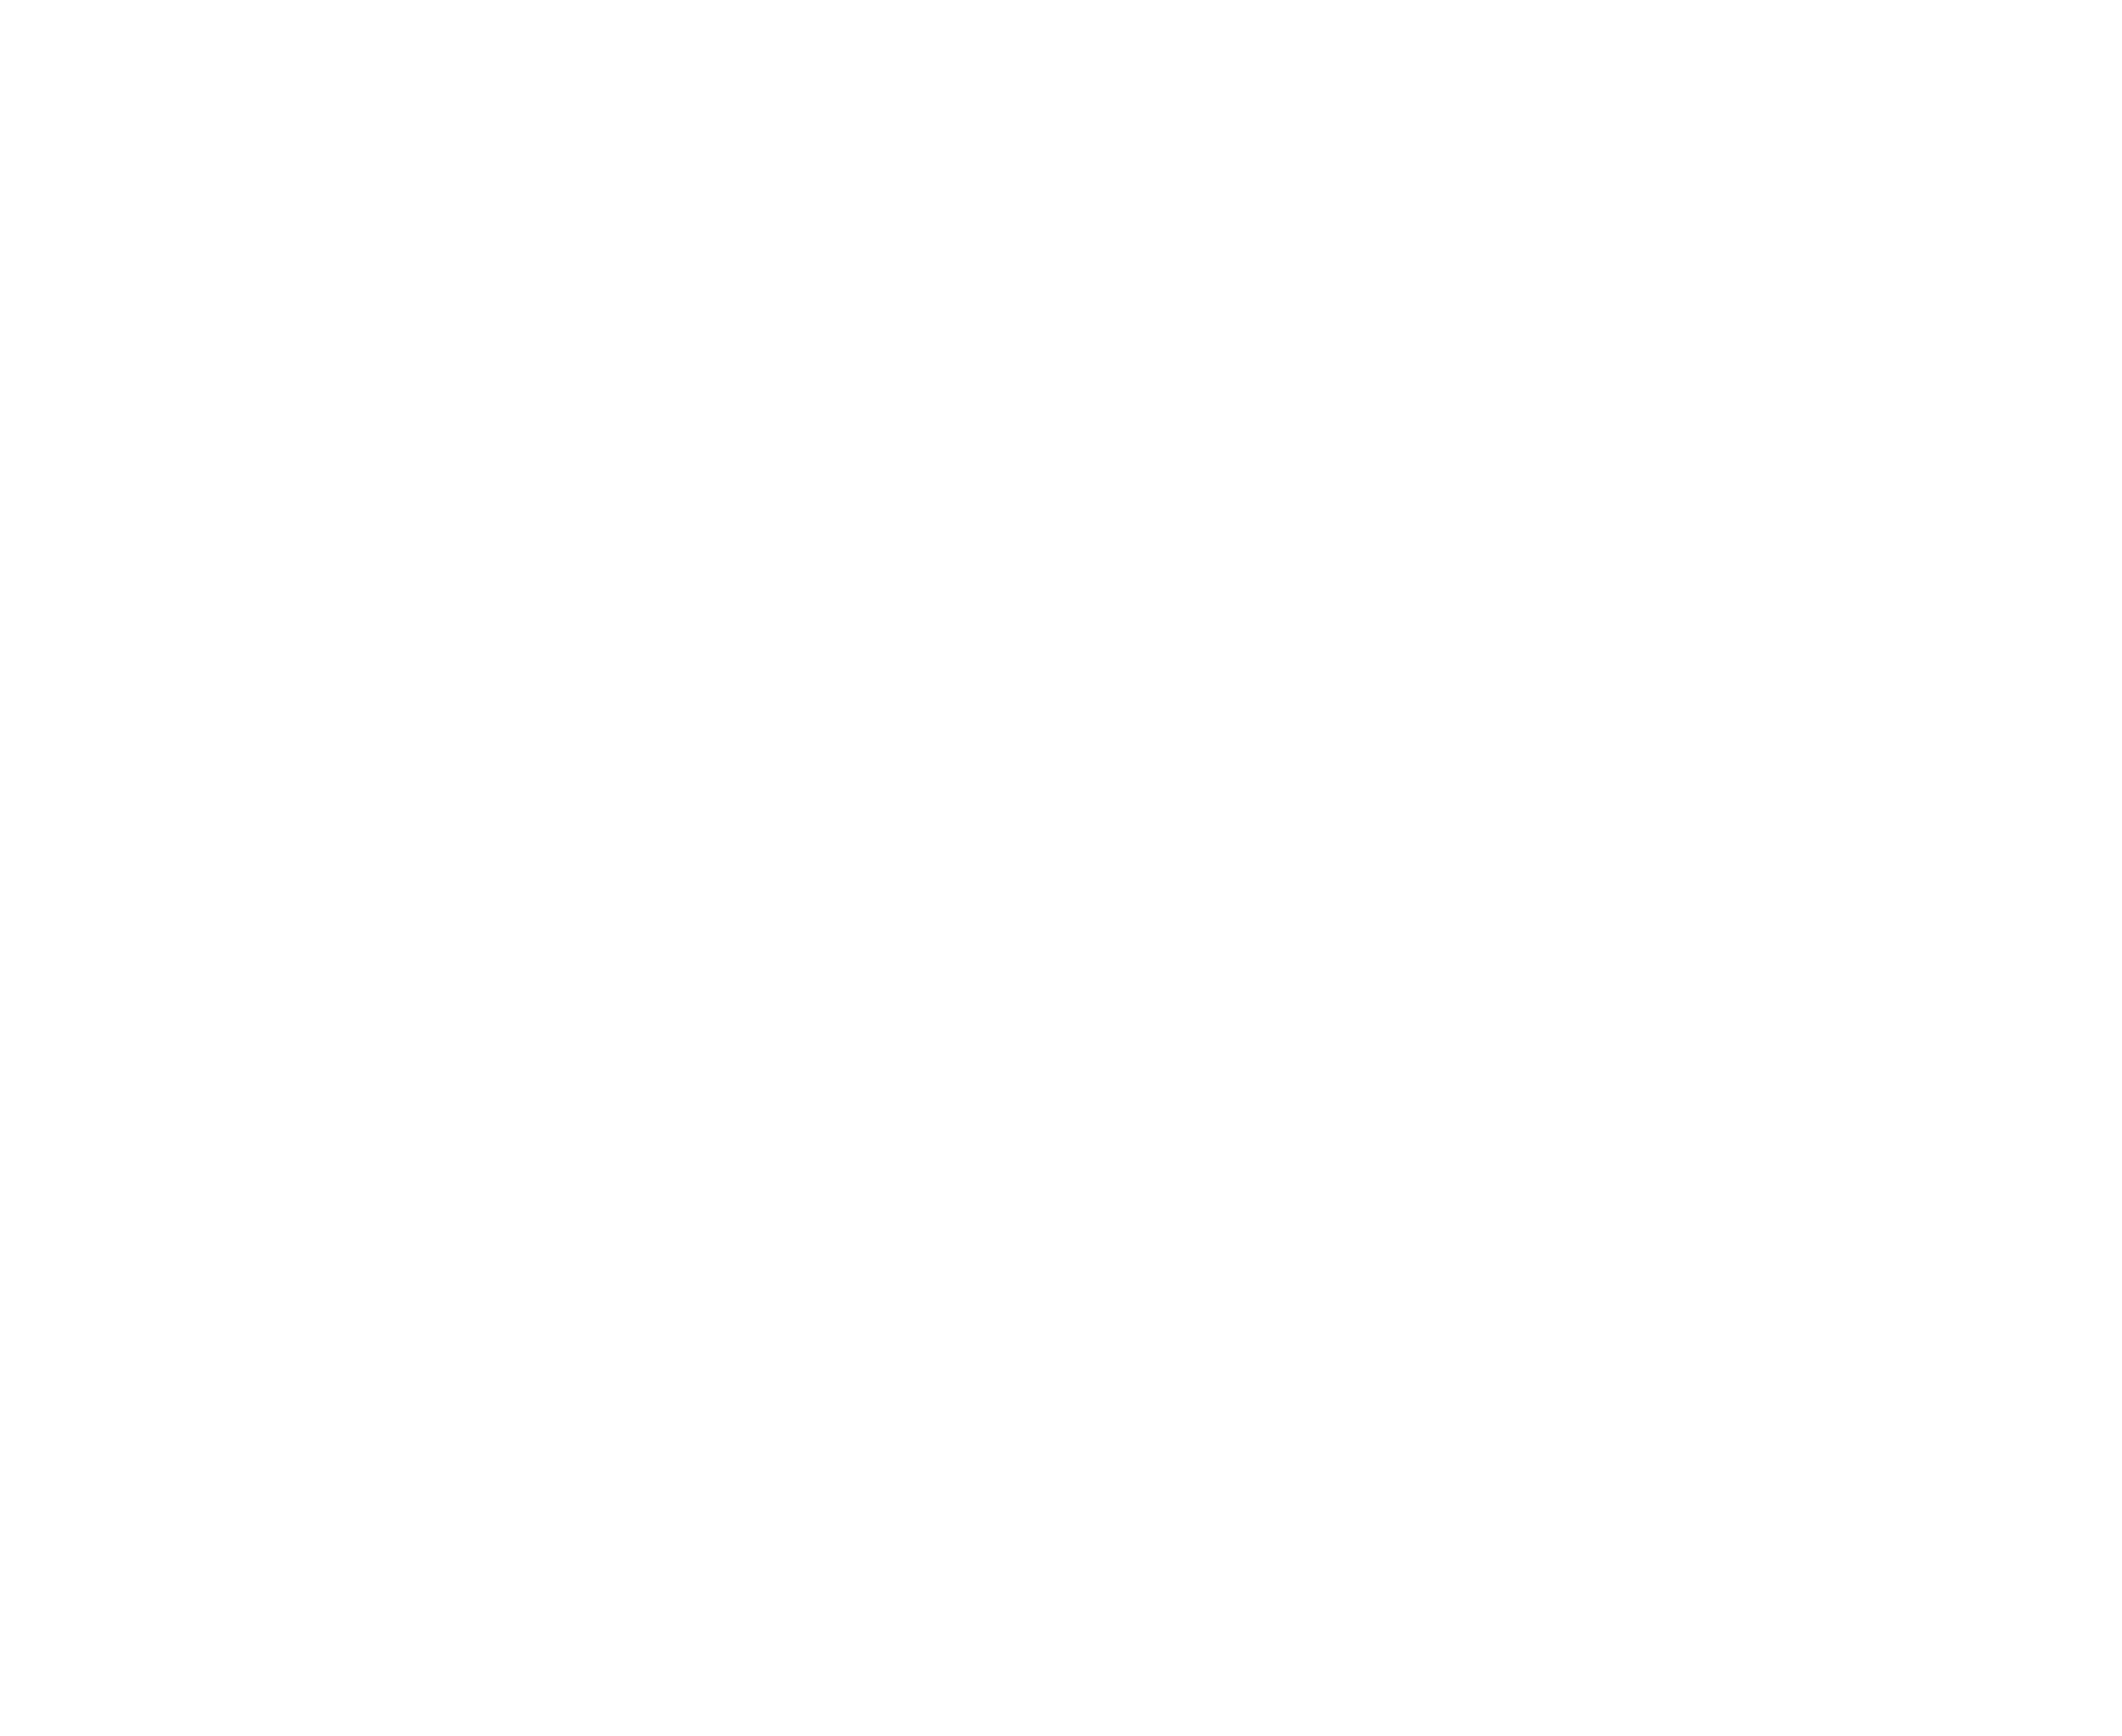 nissan-logo-2020-white.png